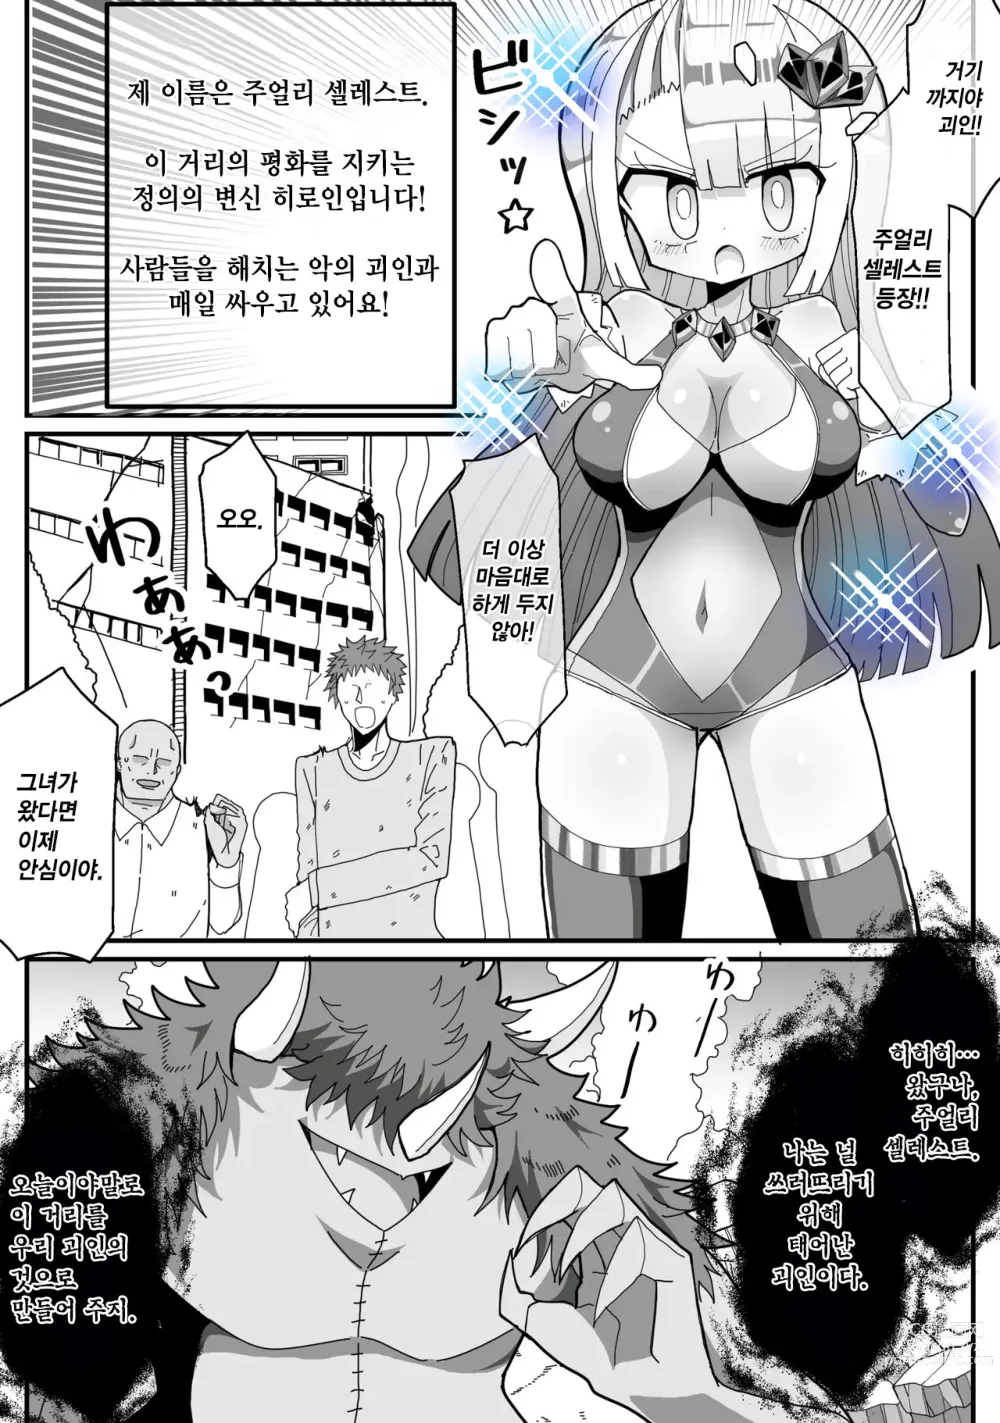 Page 2 of doujinshi 몰래 변신 히로인 하는 수수 거유 OL이 성희롱 상사에게 정체를 들켜서 범해지는 이야기